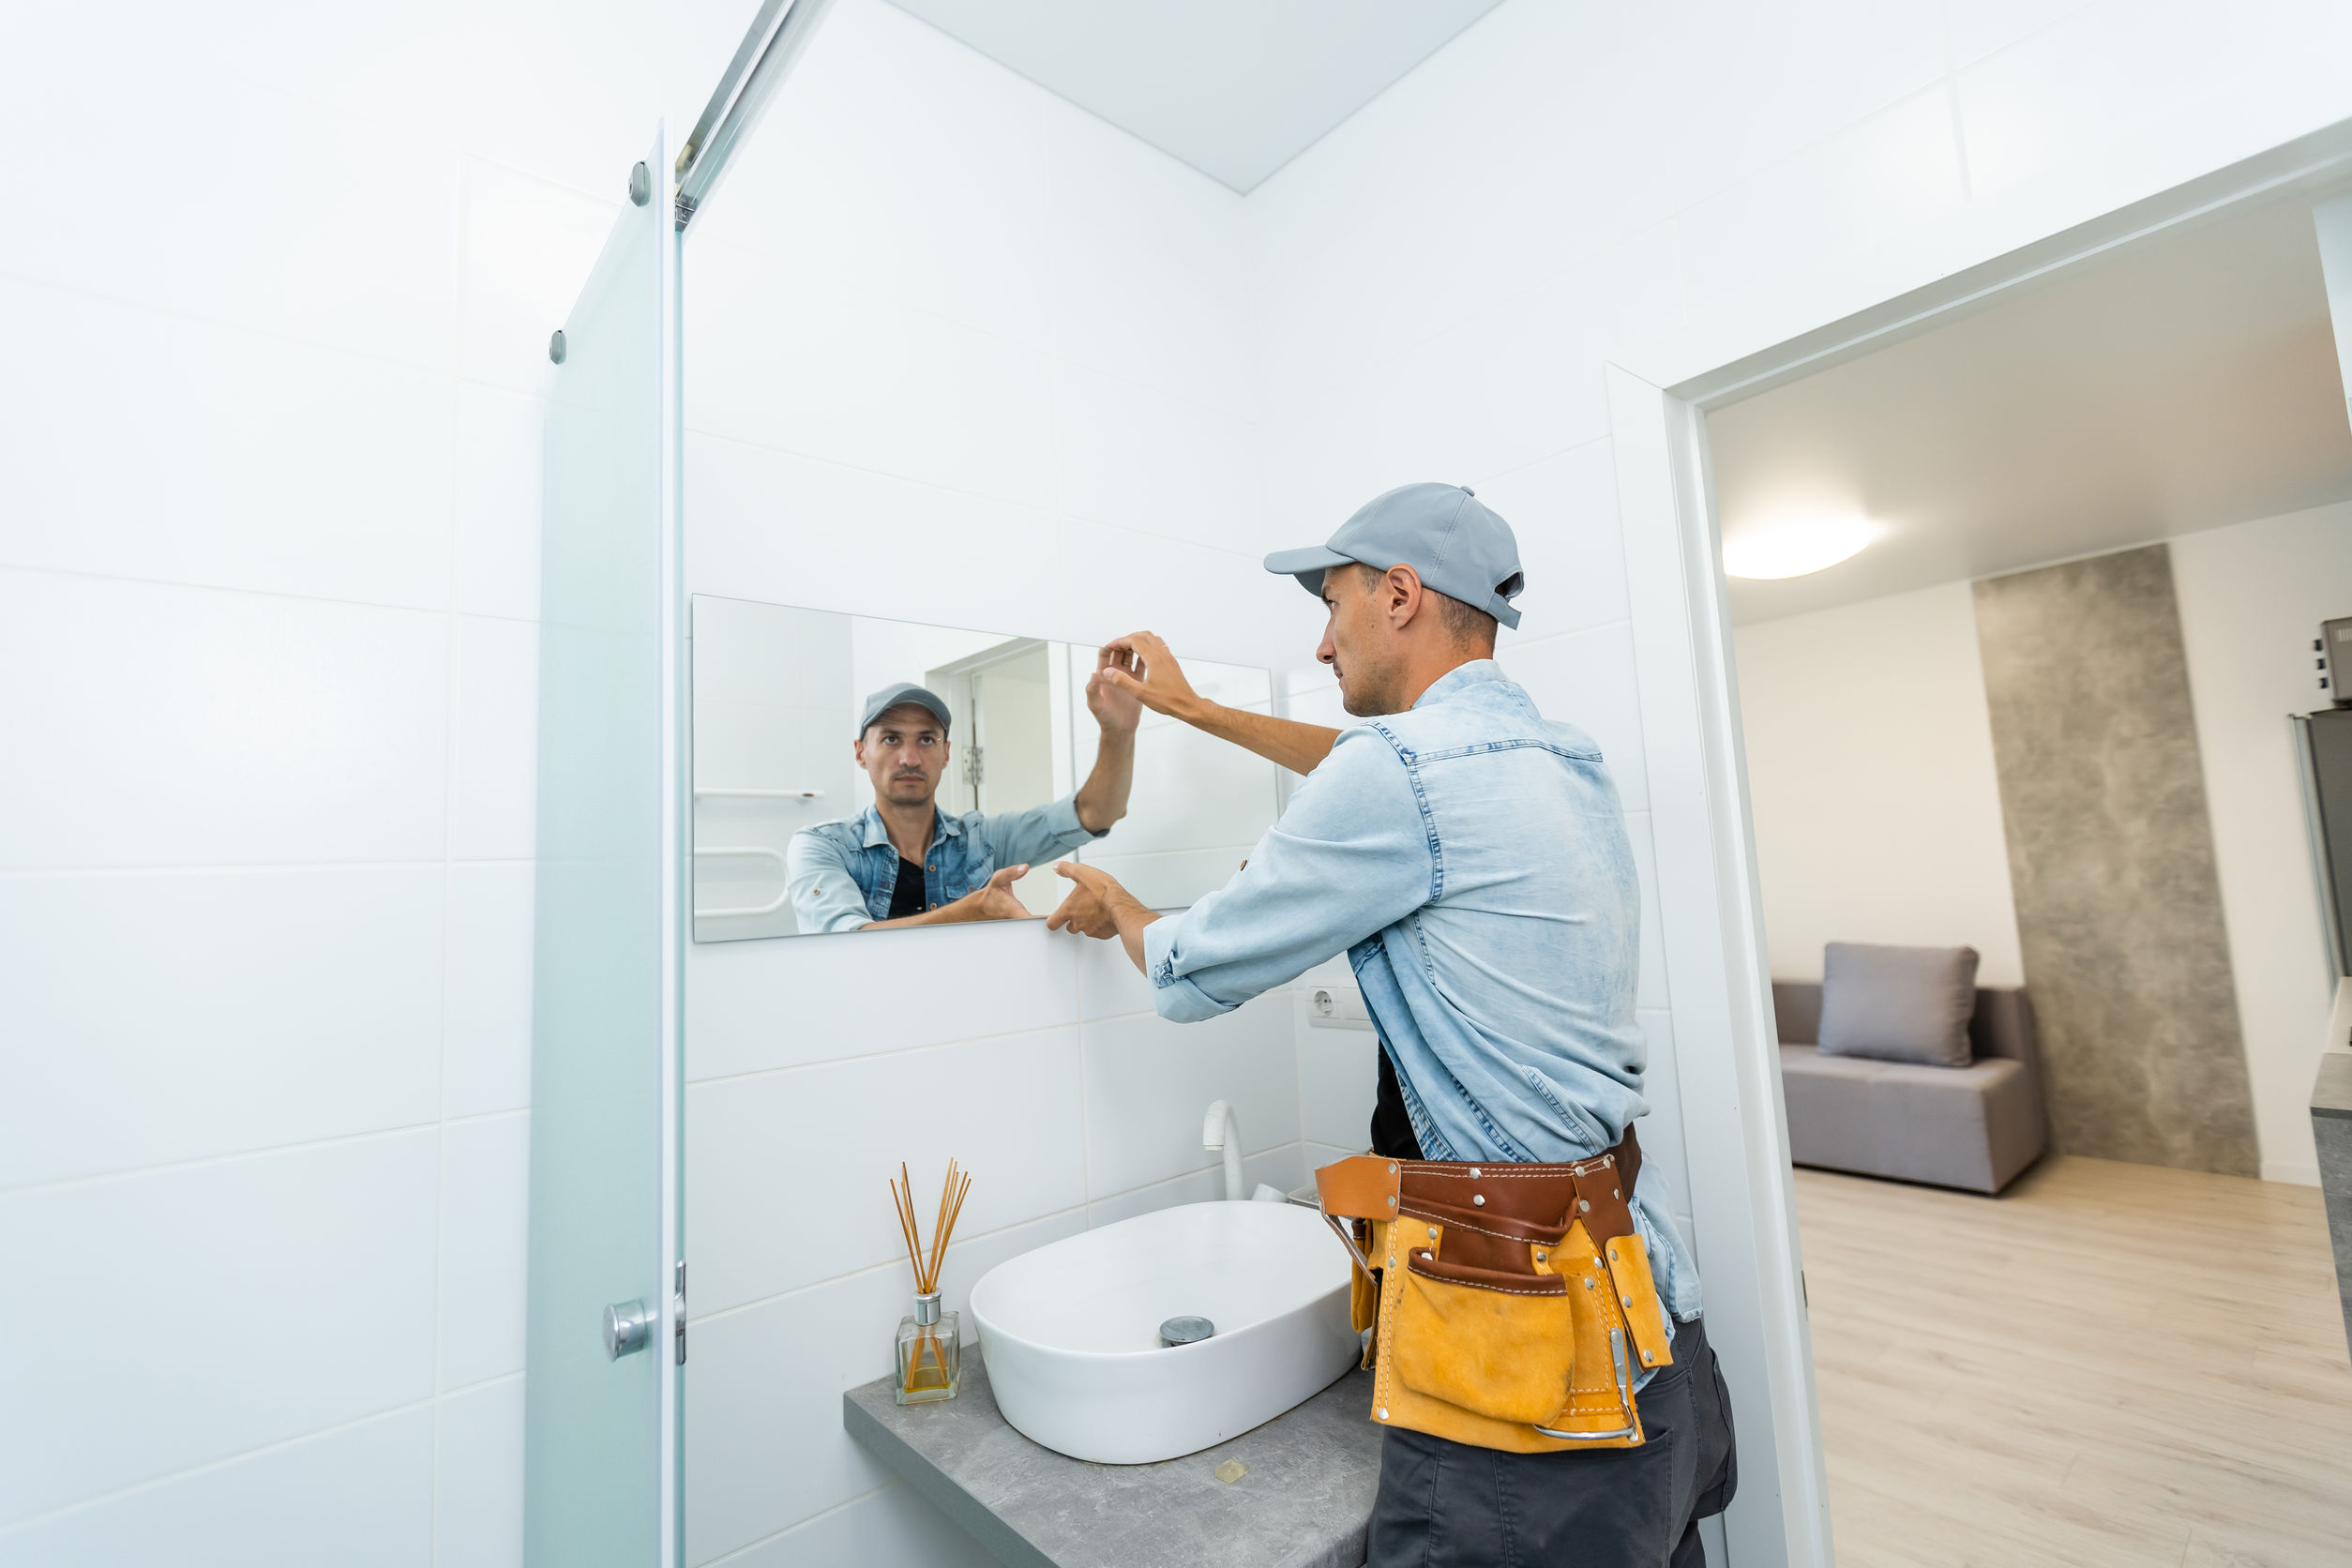 Bathroom remodeling company case study